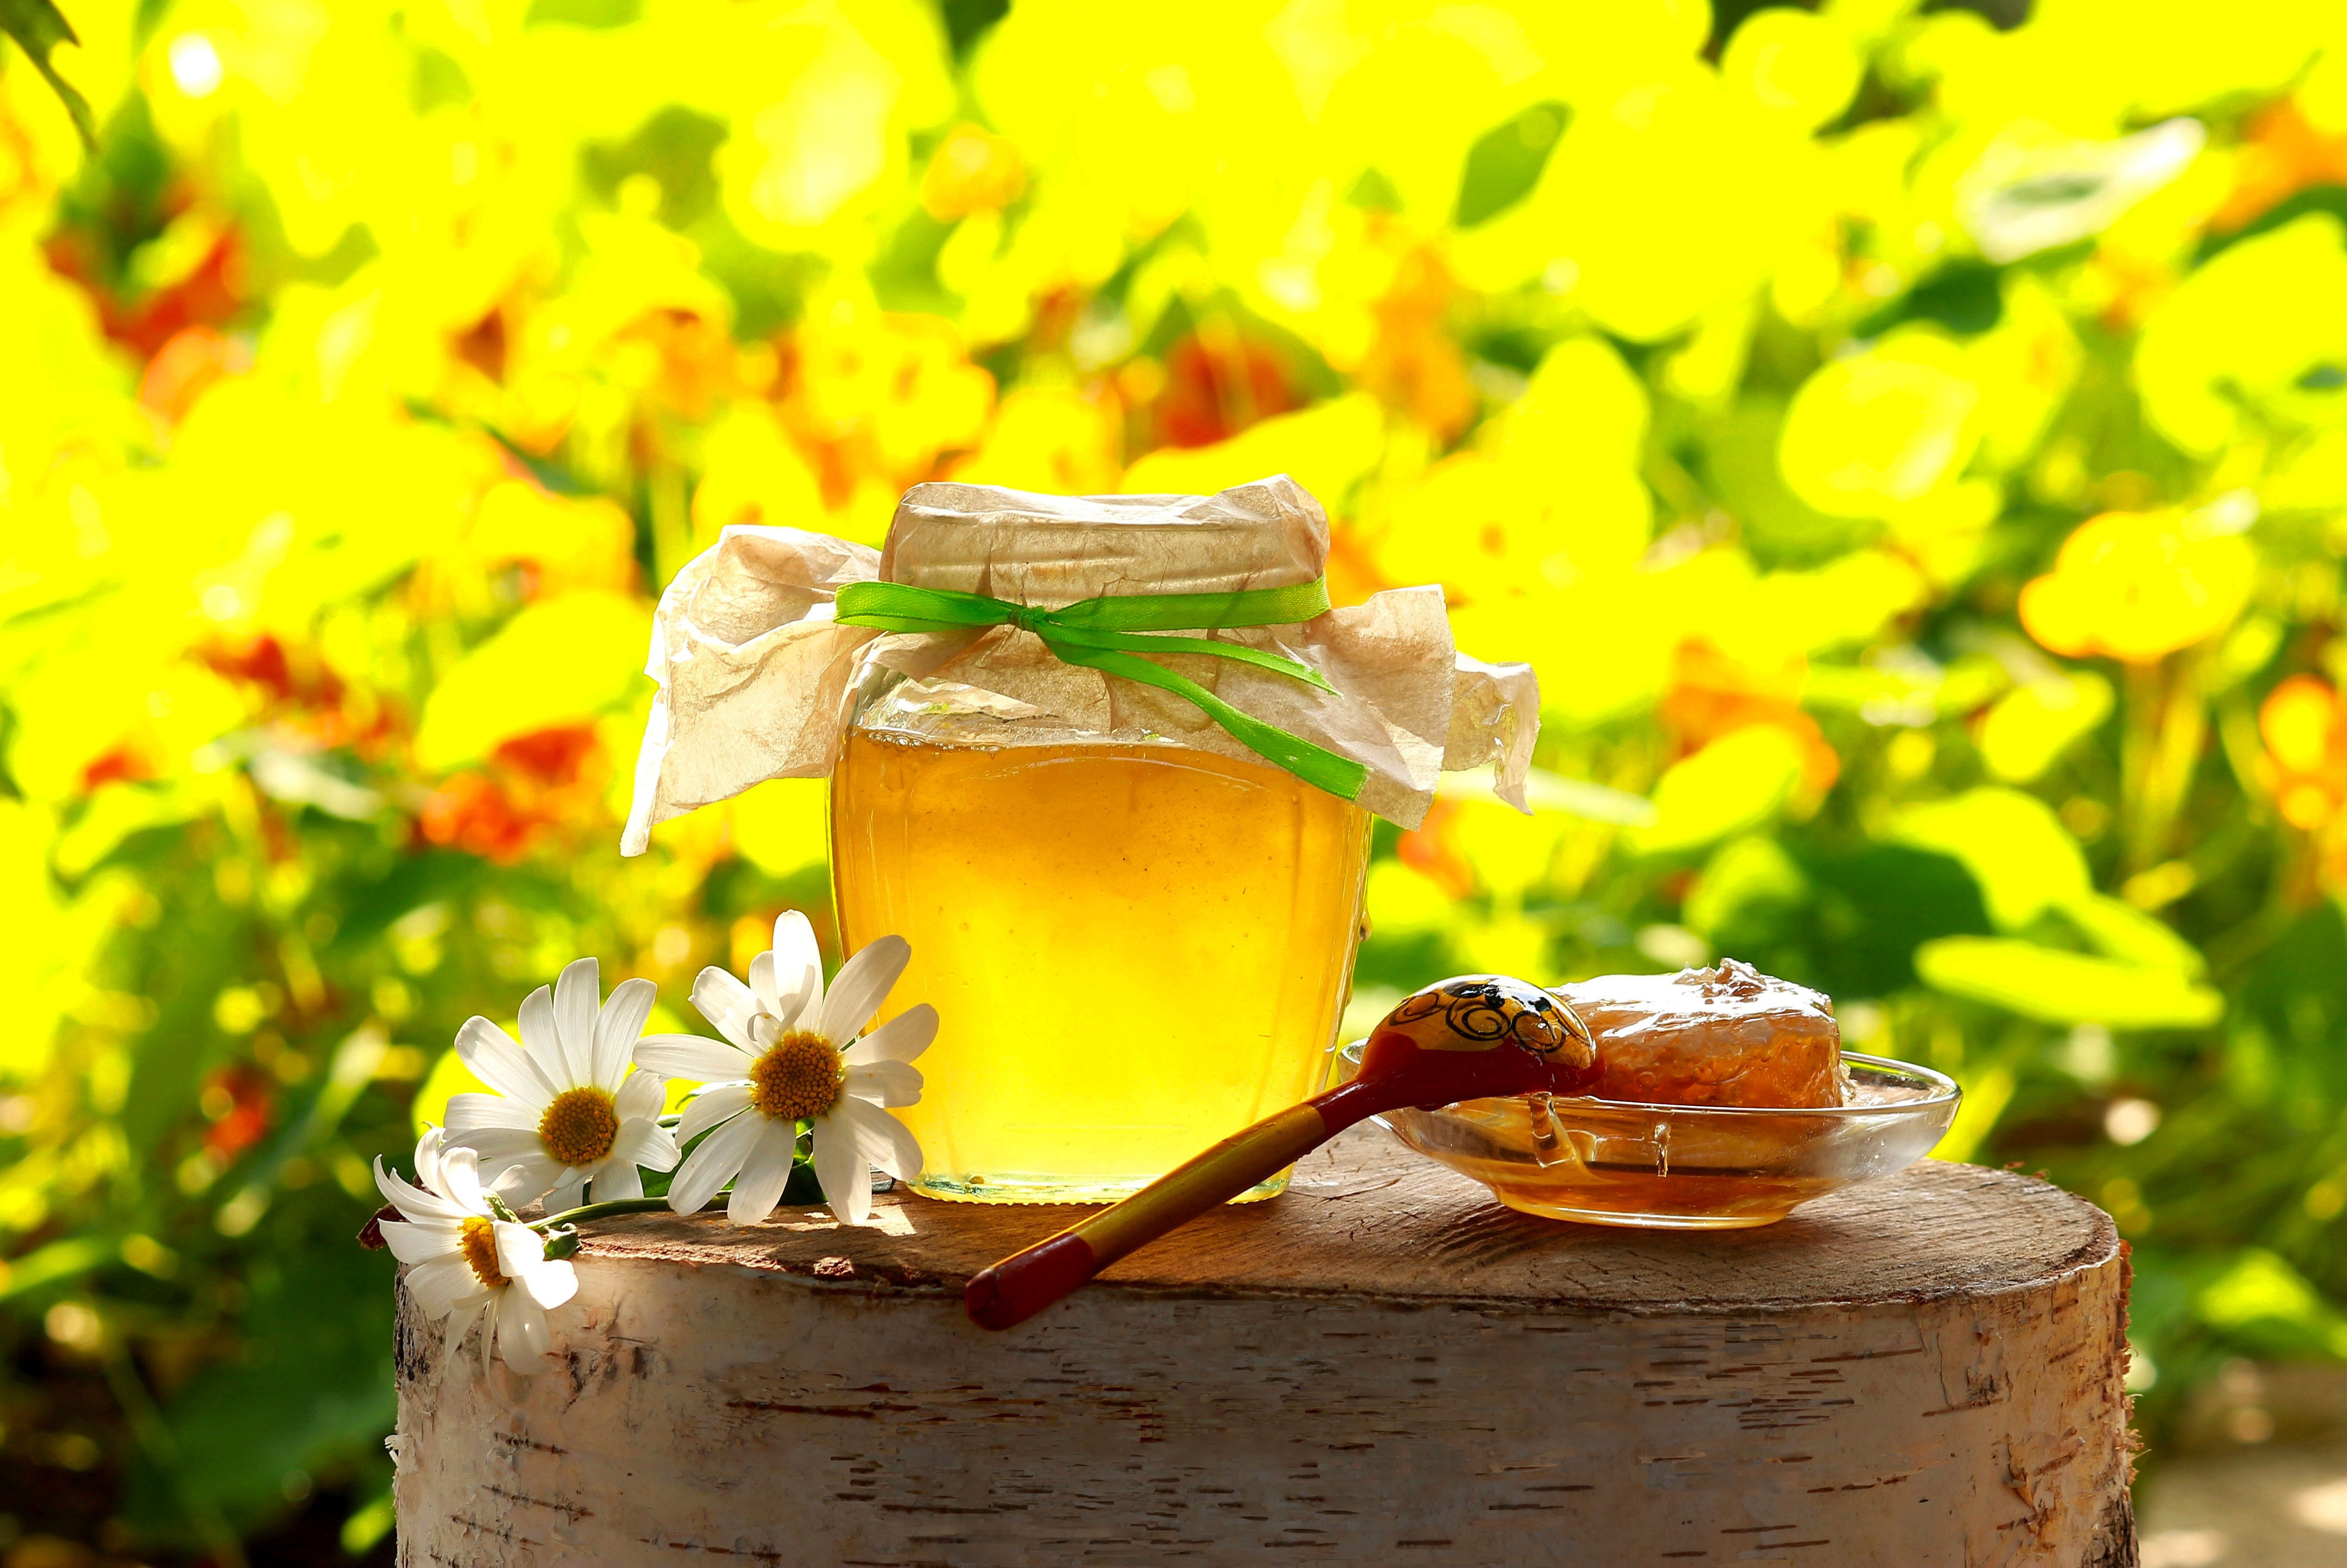 Картинки на тему мед